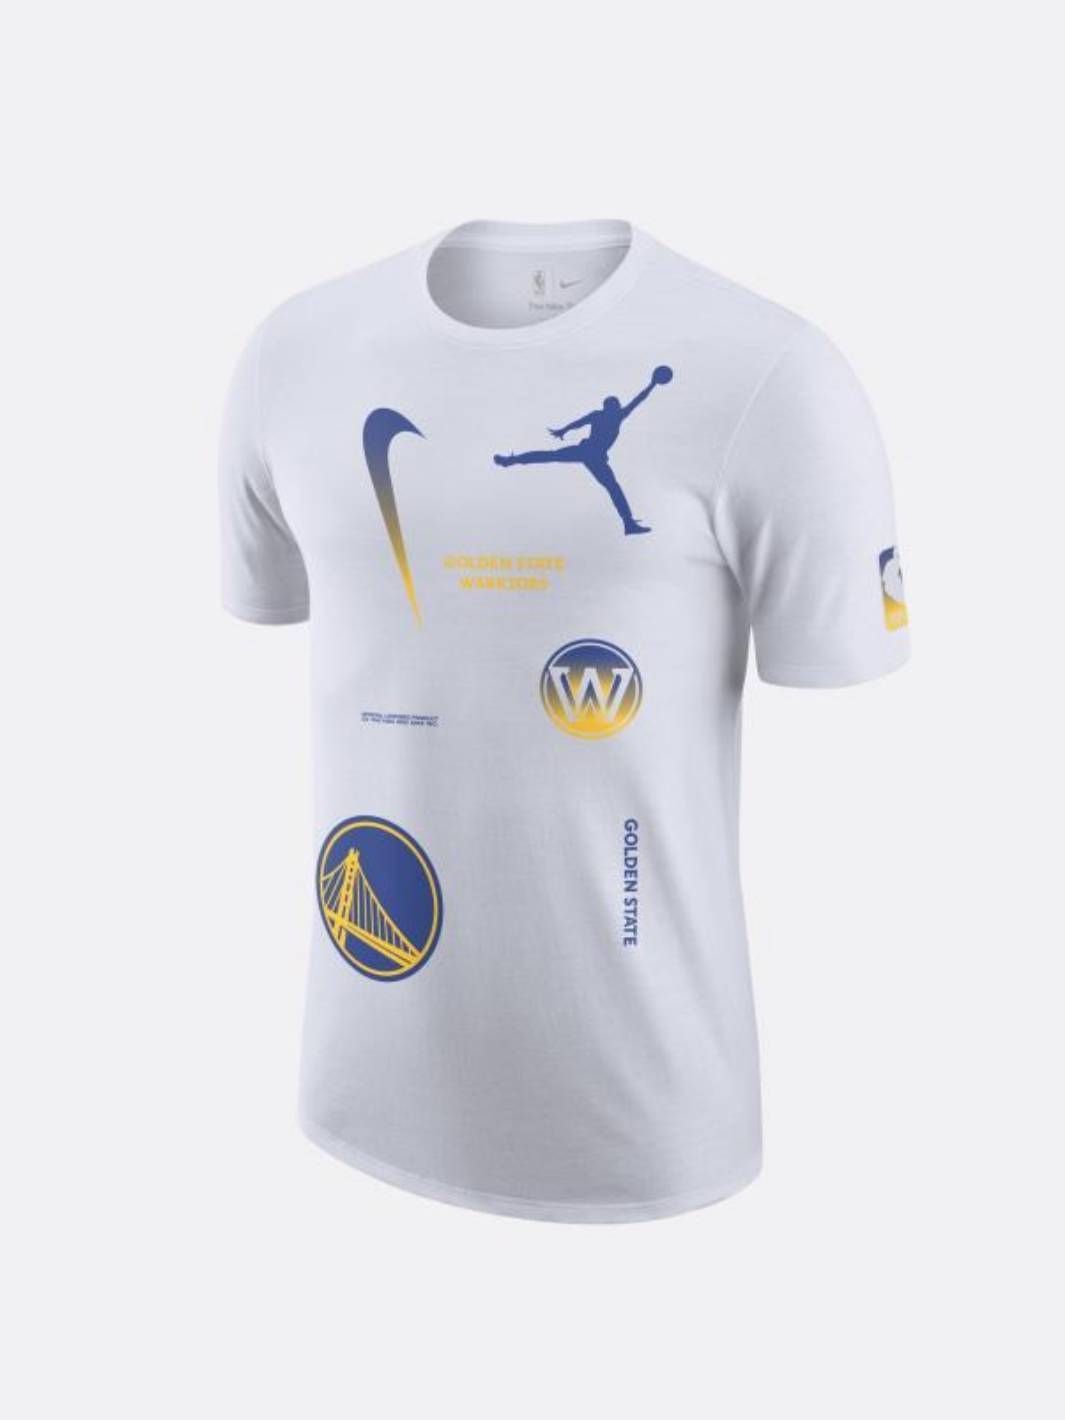 Nike, Shirts, Nike Drifit Nba Golden State Warriors Short Sleeve Mens  Large Tshirt